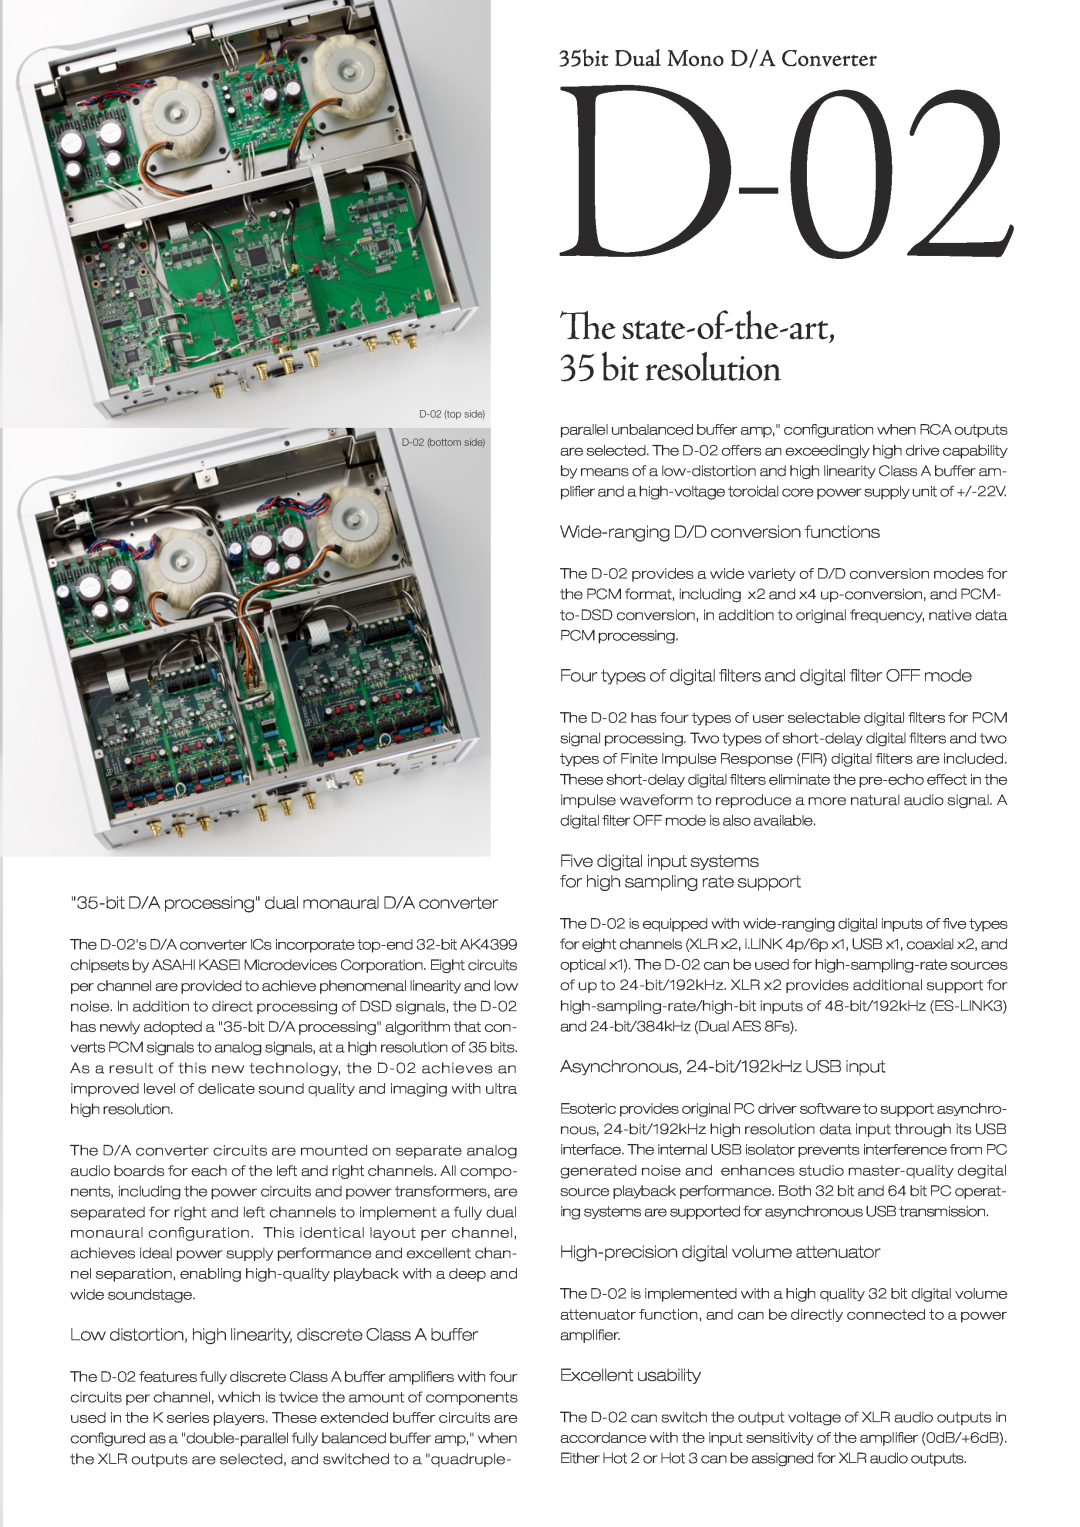 Esoteric P-02/D-02 35bit Dual Mono D/A Converter, e state-of-the-art,35 bit resolution, Five digital input systems 